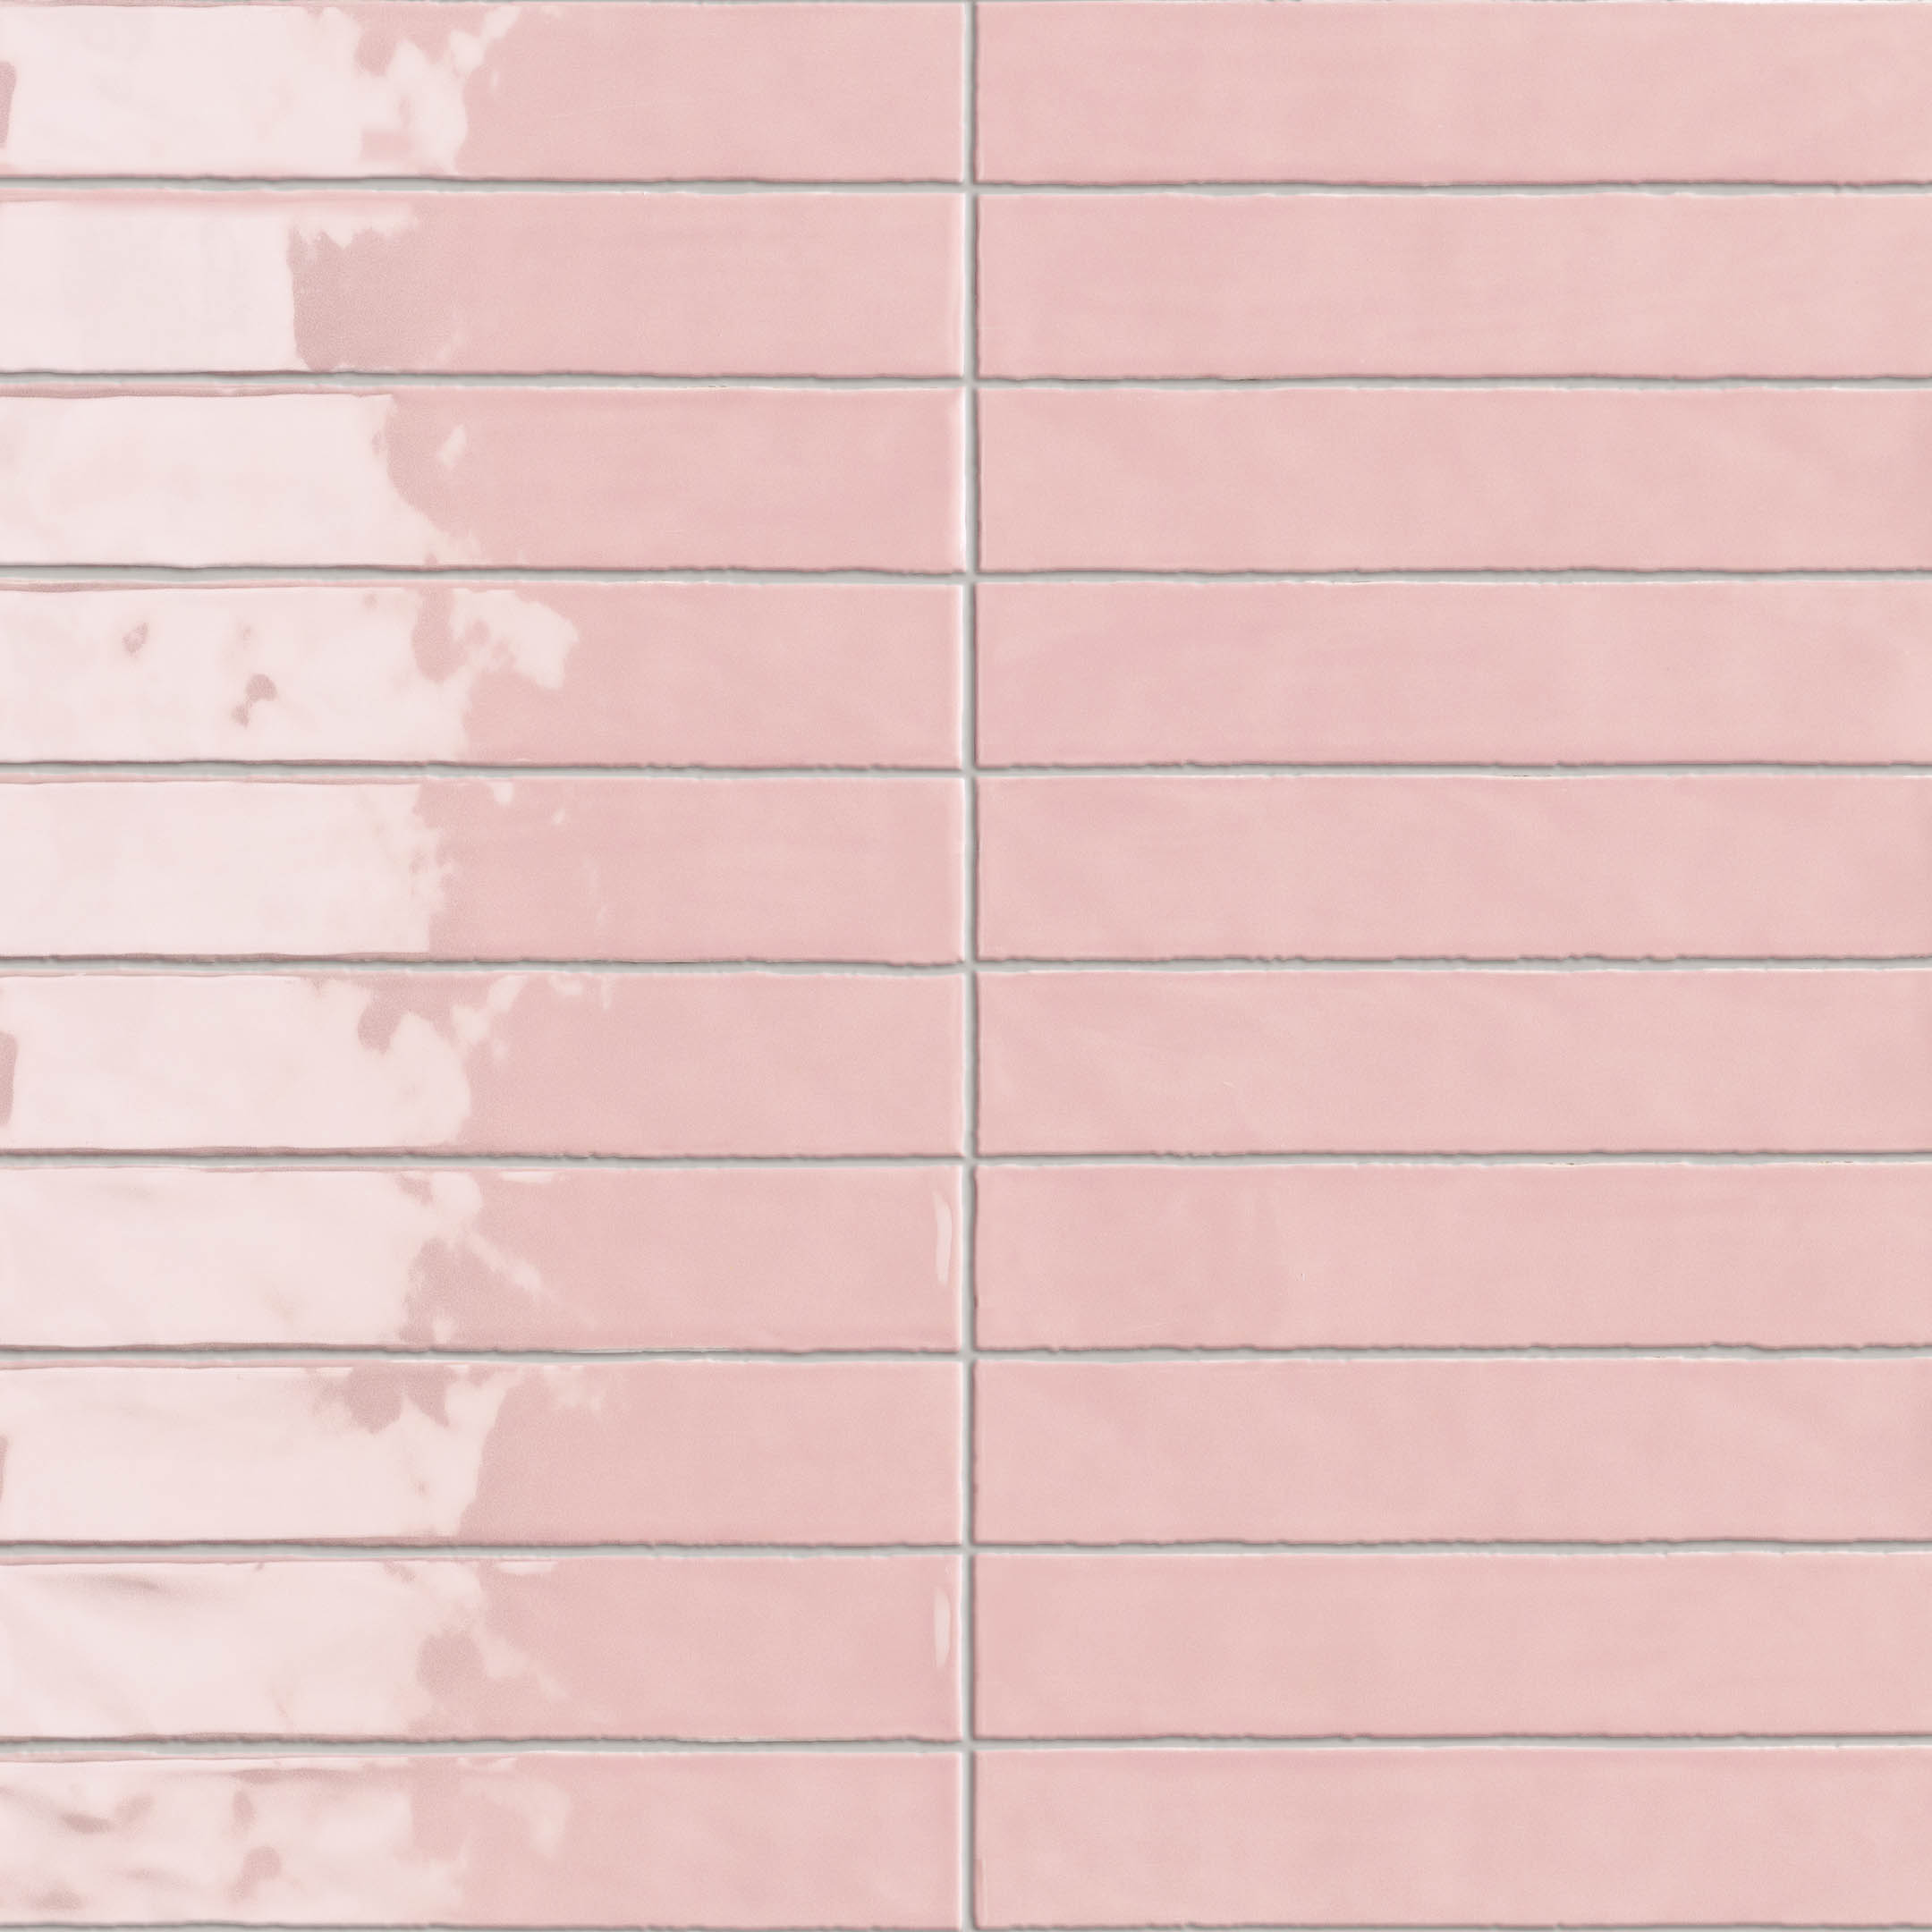 Vernici 2 x 10 / Baby Pink / Box (6.45 Sq. ft.)